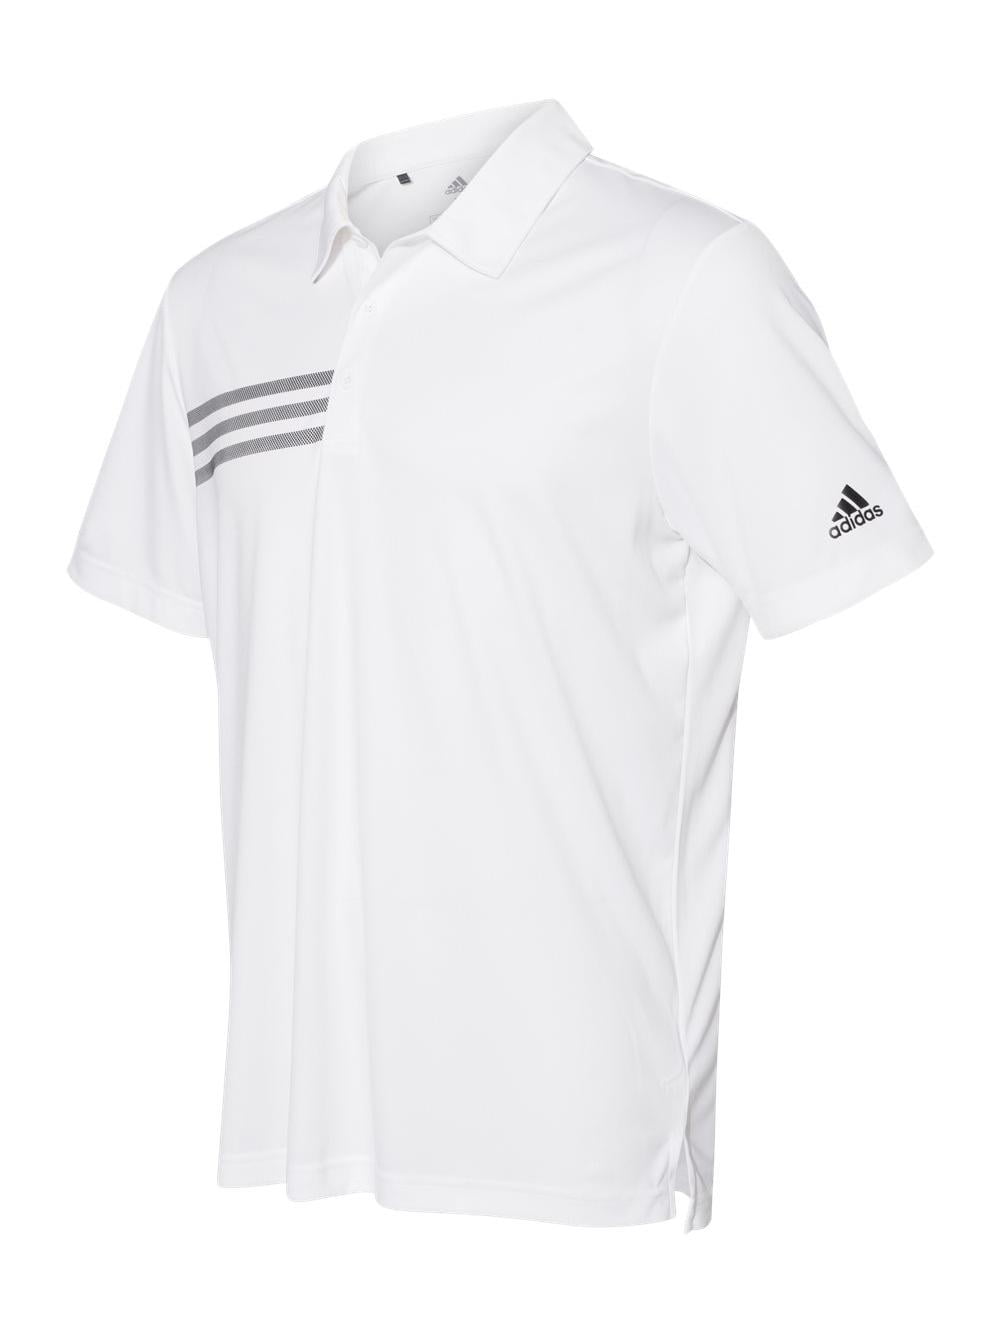 Adidas - 3-Stripes Chest Polo A324 - White/ Black Size: 3XL - Walmart.com